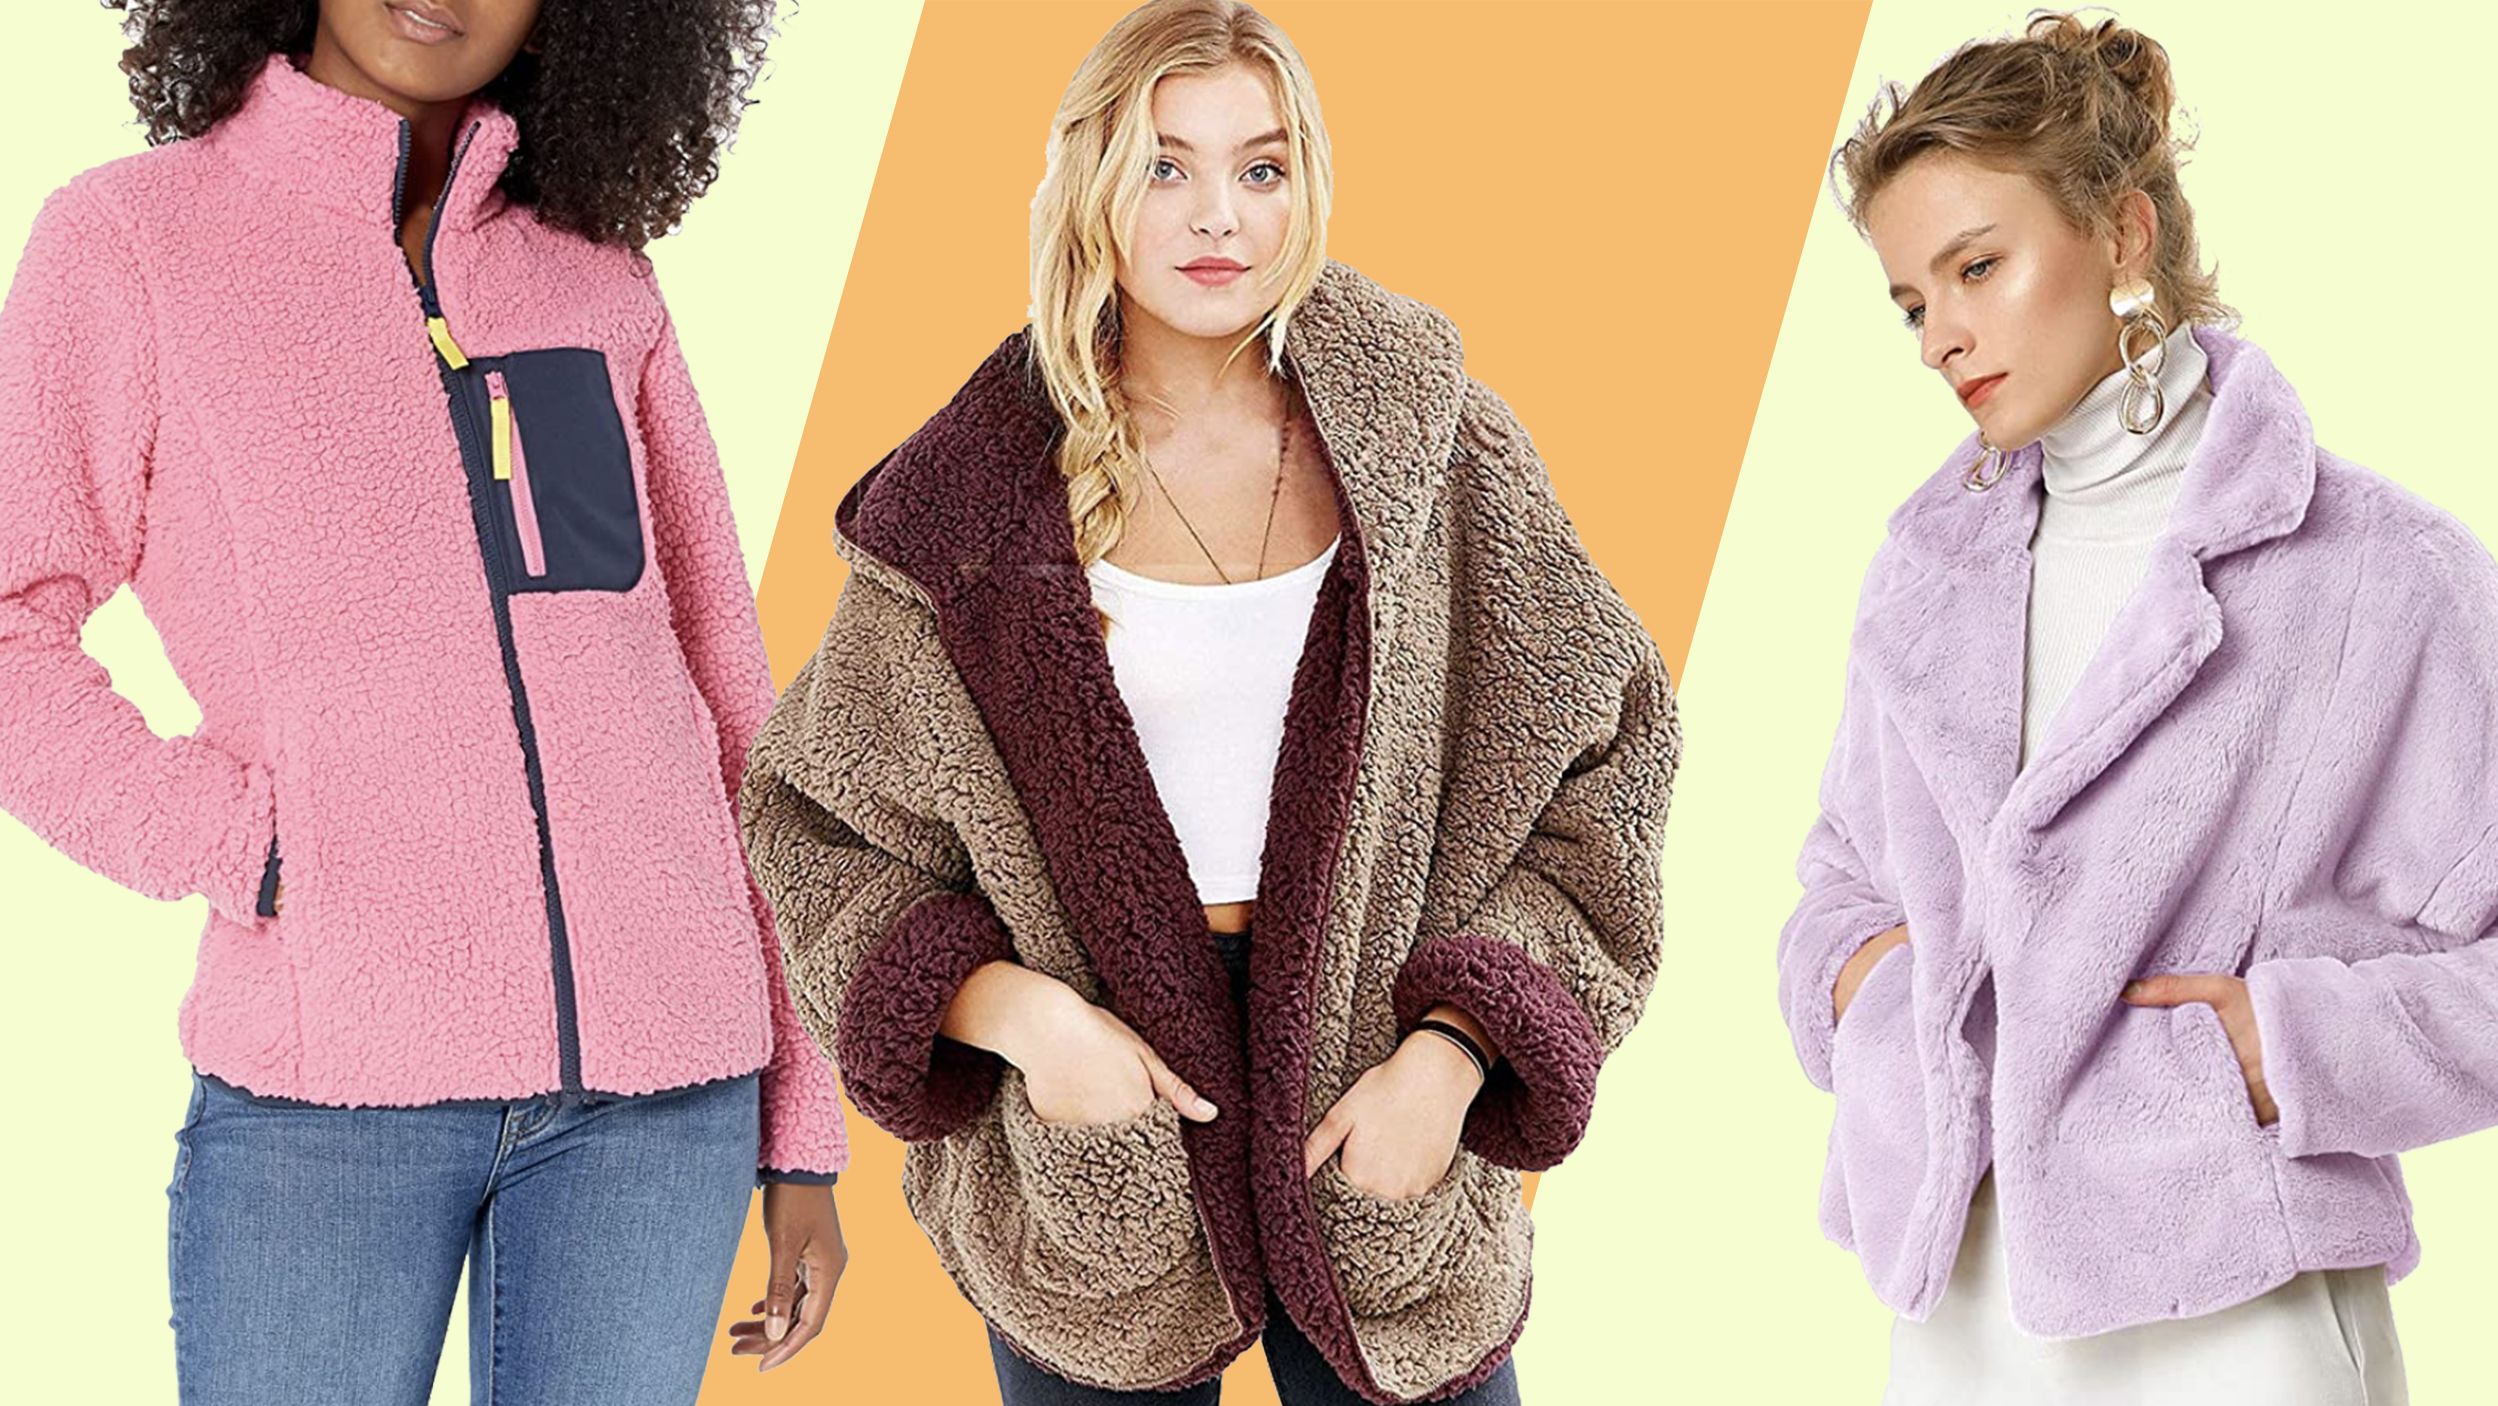 Women's Reversible teddy wool jacket with two way zip